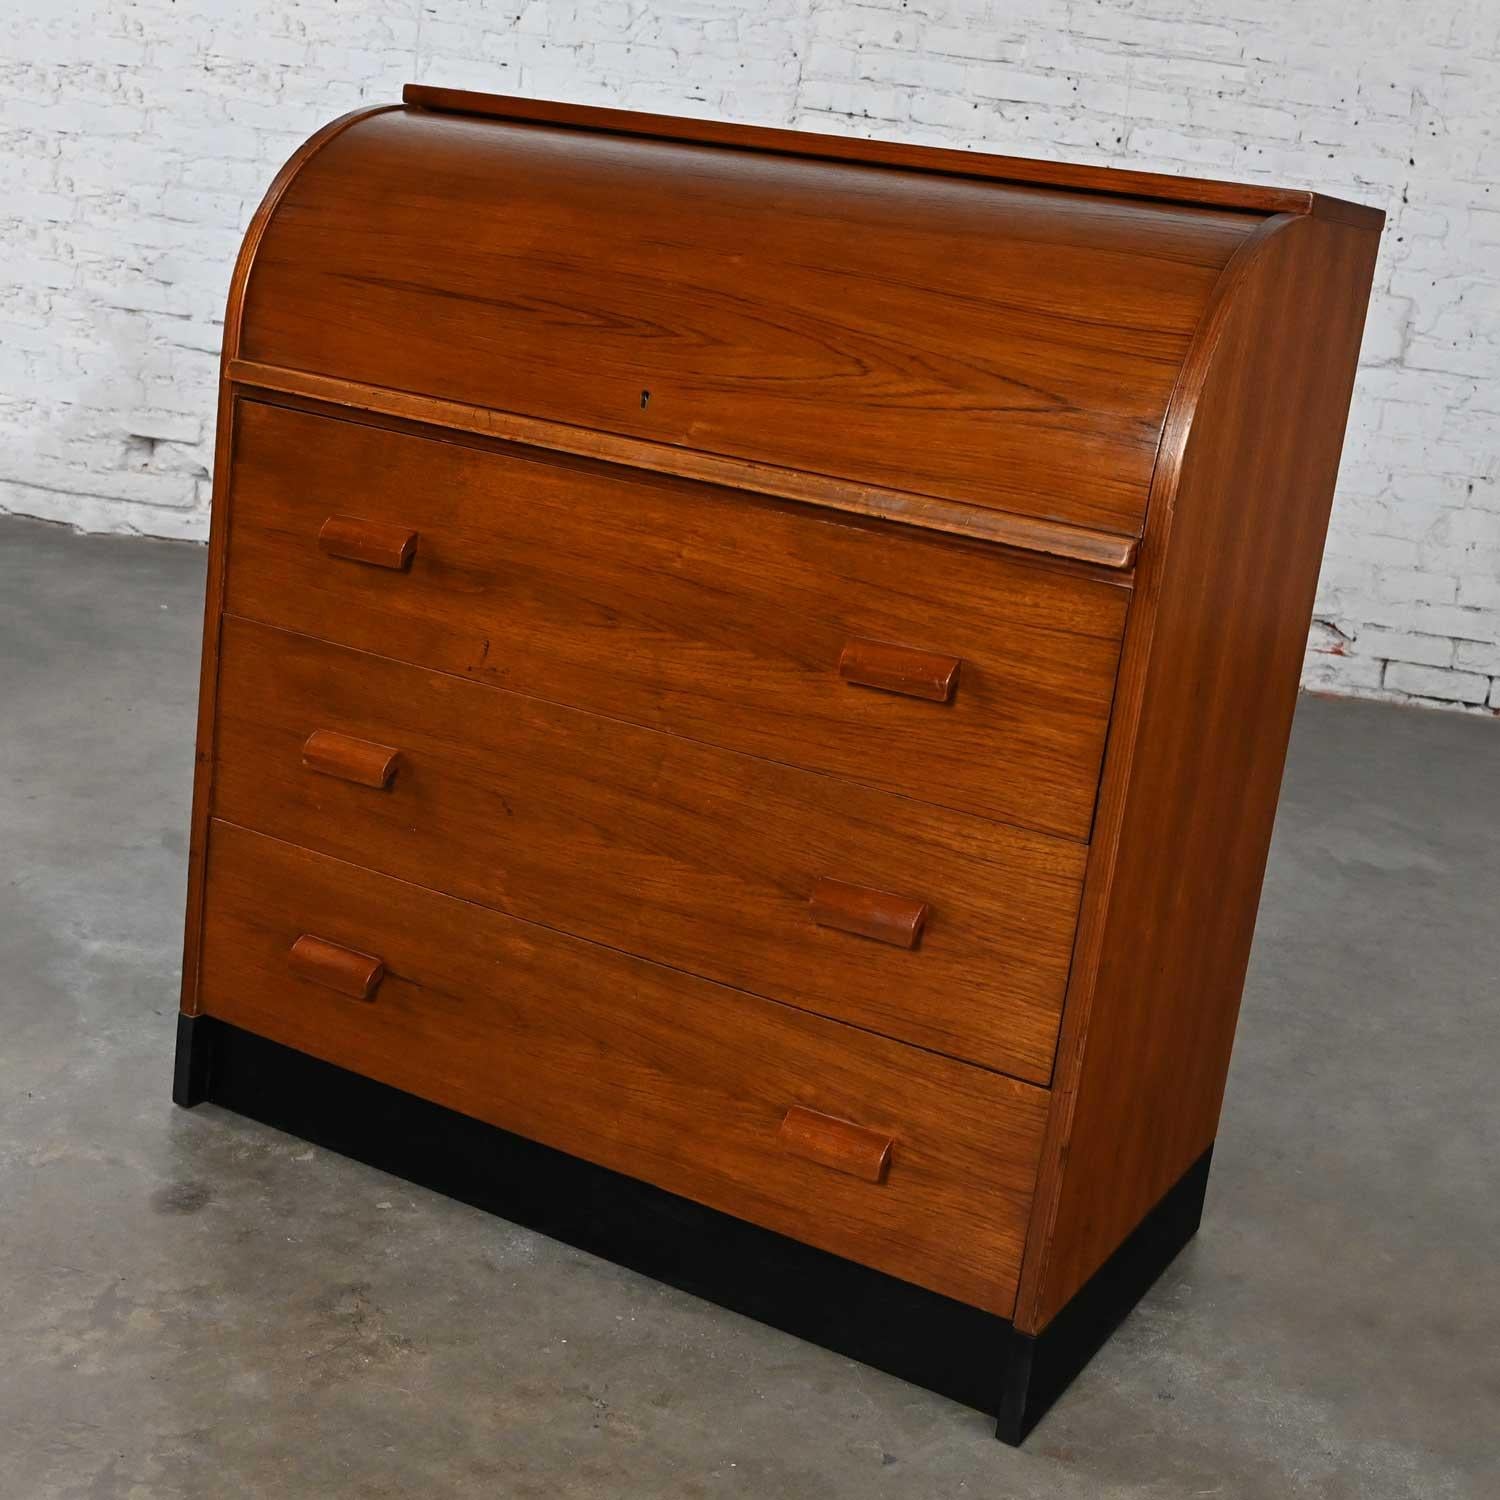 Danish Mid-20th Century Scandinavian Modern Teak Roll Top Desk or Dresser For Sale